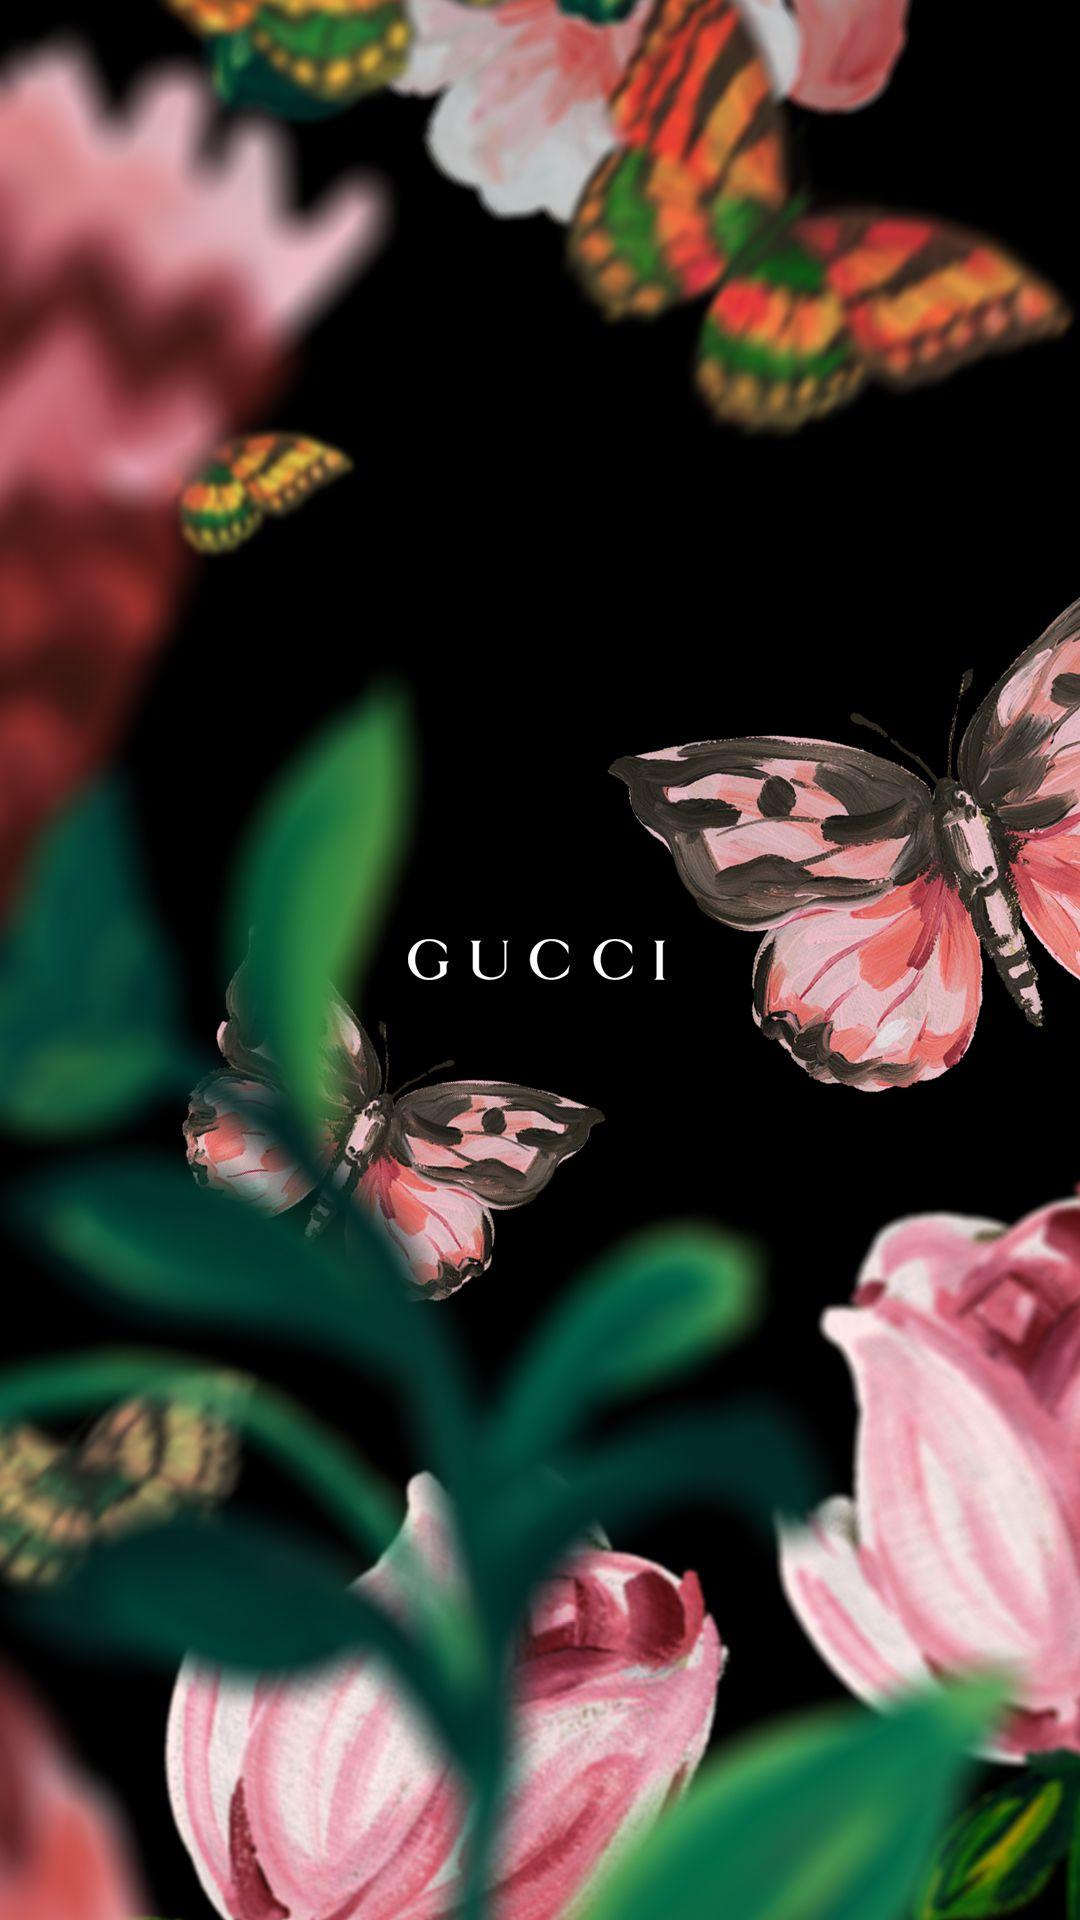 48+] Gucci iPhone Wallpaper Supreme on WallpaperSafari  Iphone x 壁紙,  Iphone用のかわいい壁紙, アップルの壁紙